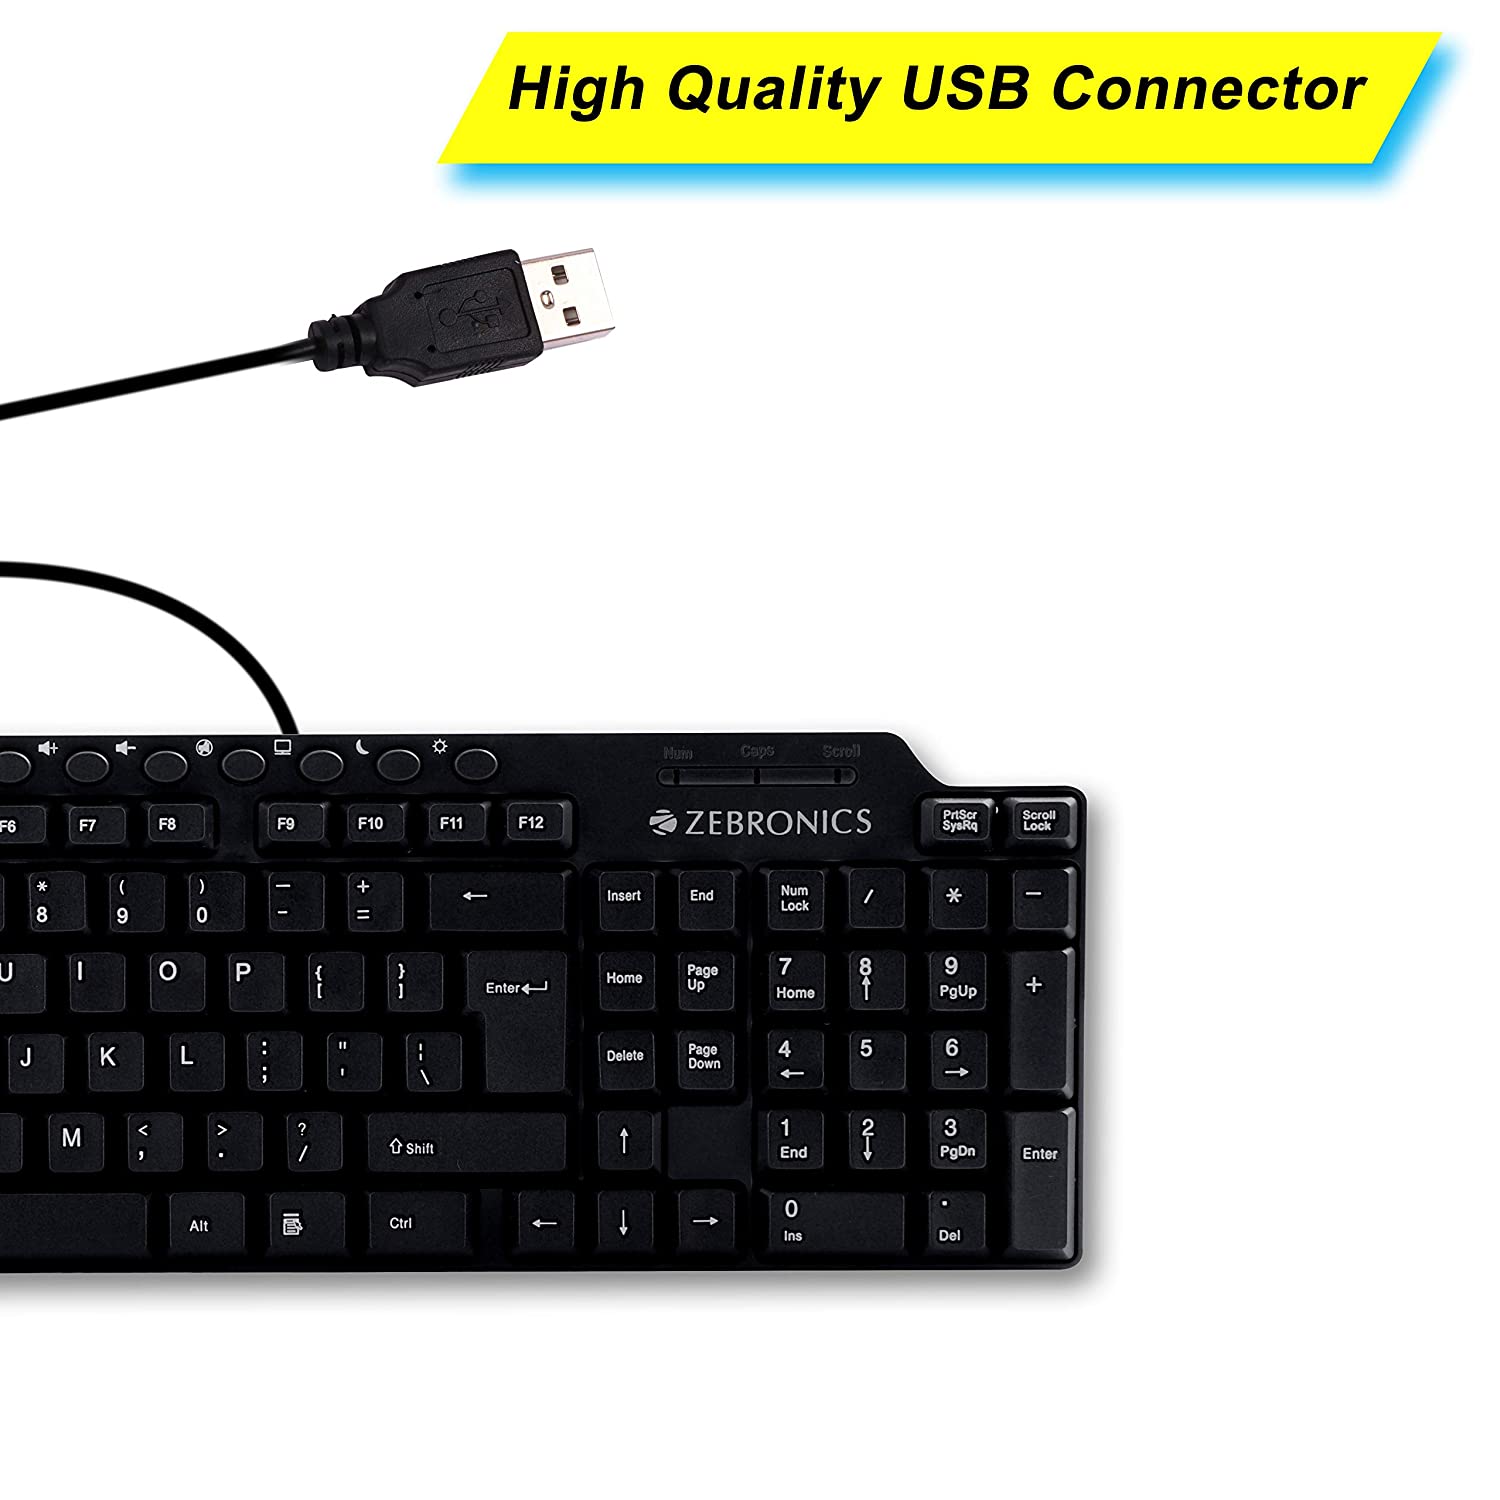 Zebronics ZEB-KM2100 Multimedia USB Keyboard Comes with 114 Keys Including  12 Dedicated Multimedia Keys  with Rupee Key Hungamastart Online  Shopping